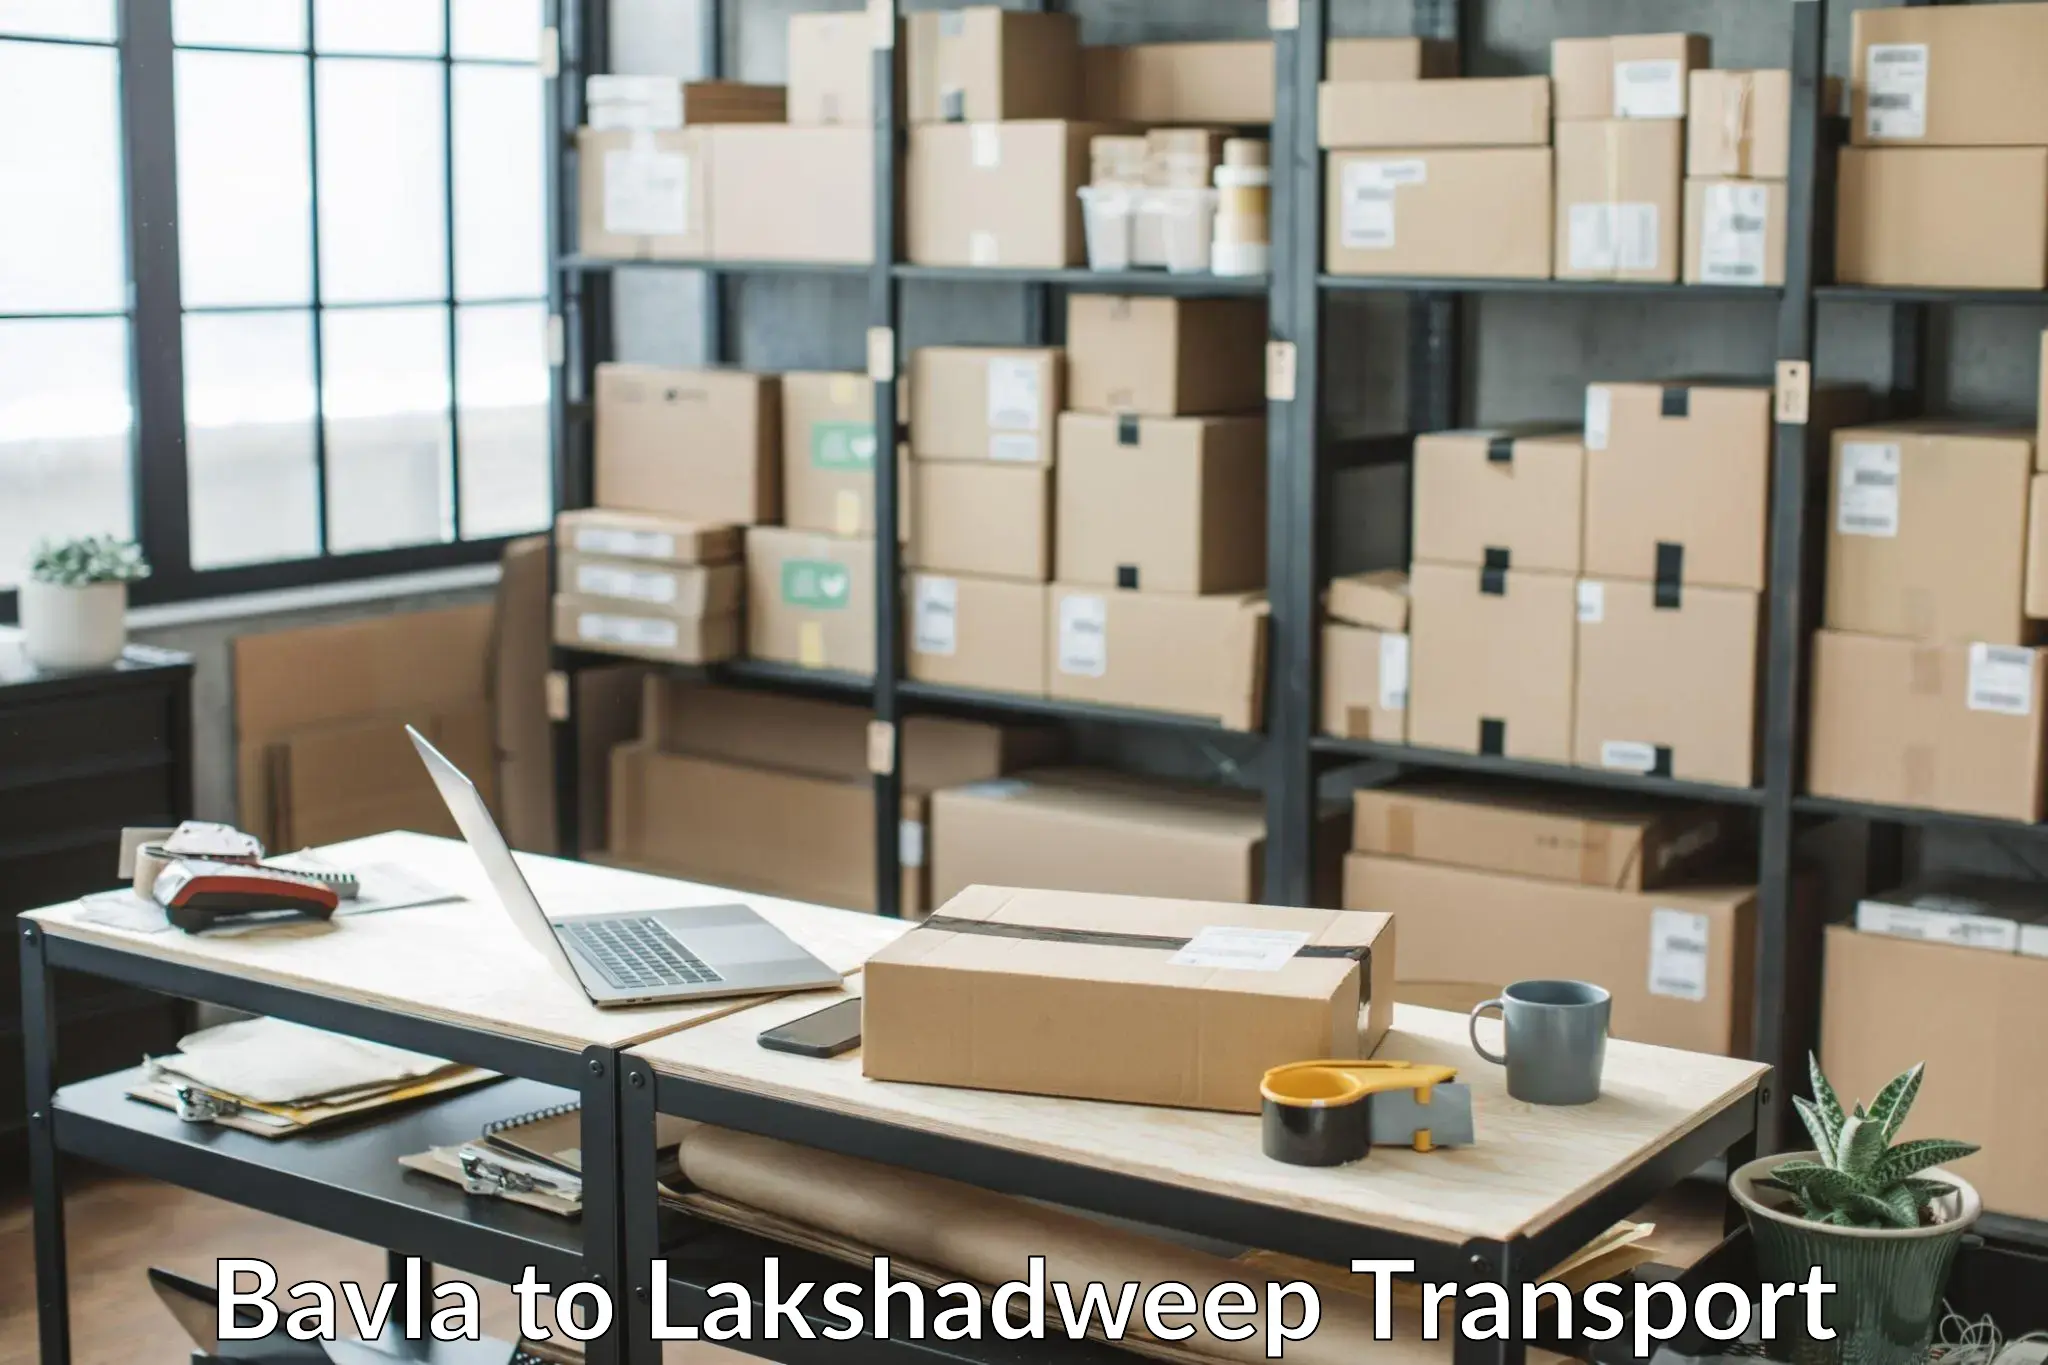 Goods delivery service Bavla to Lakshadweep